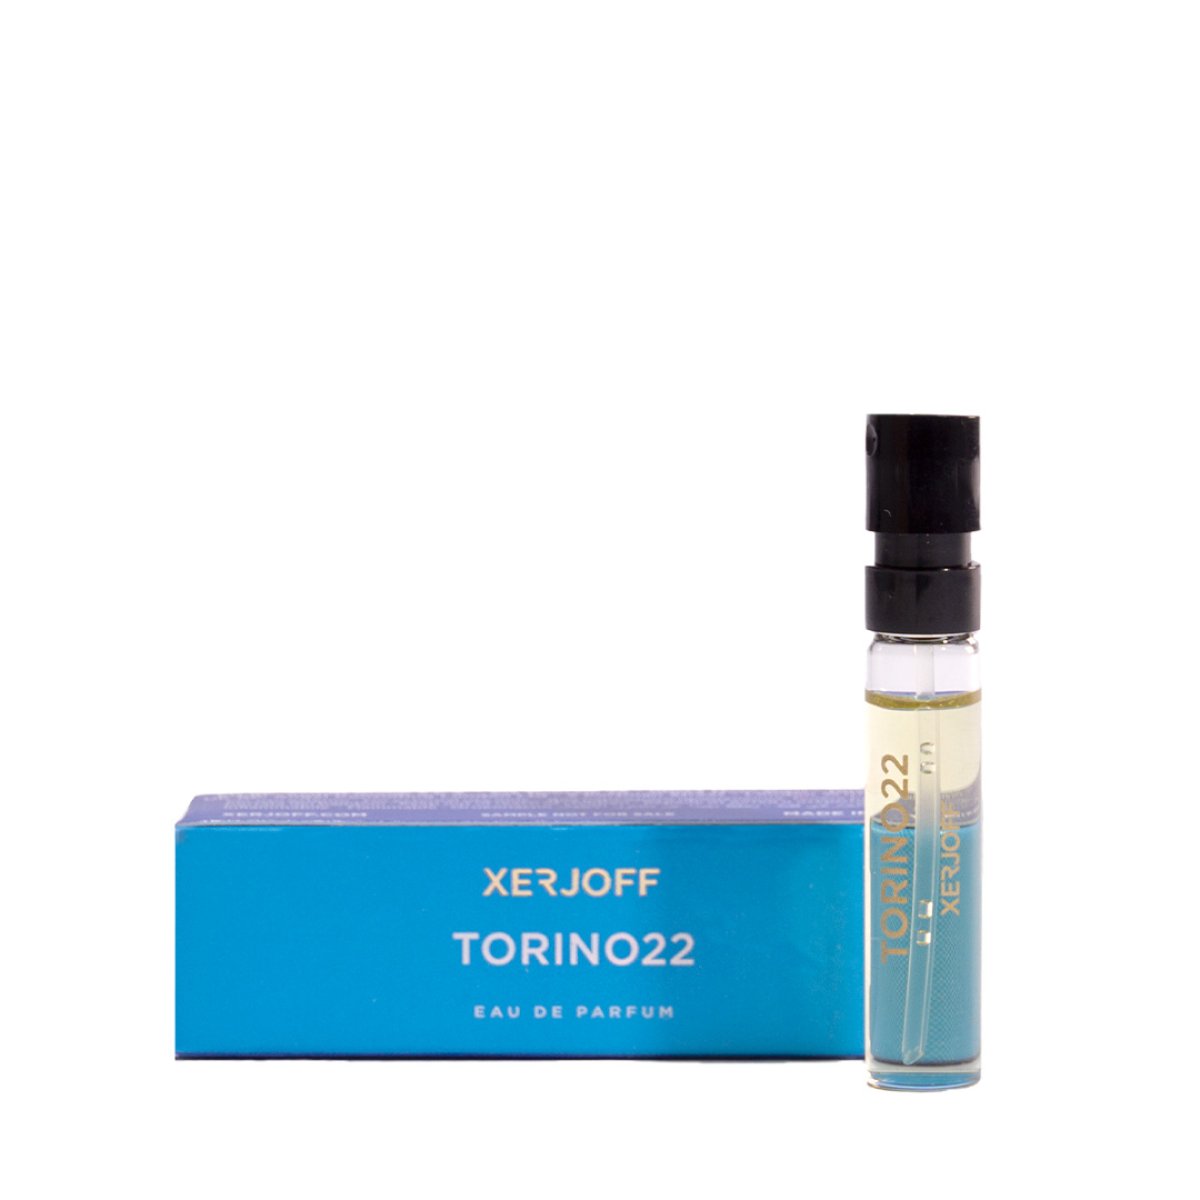 Xerjoff TORINO22 EDP sample (2 ml) von Xerjoff